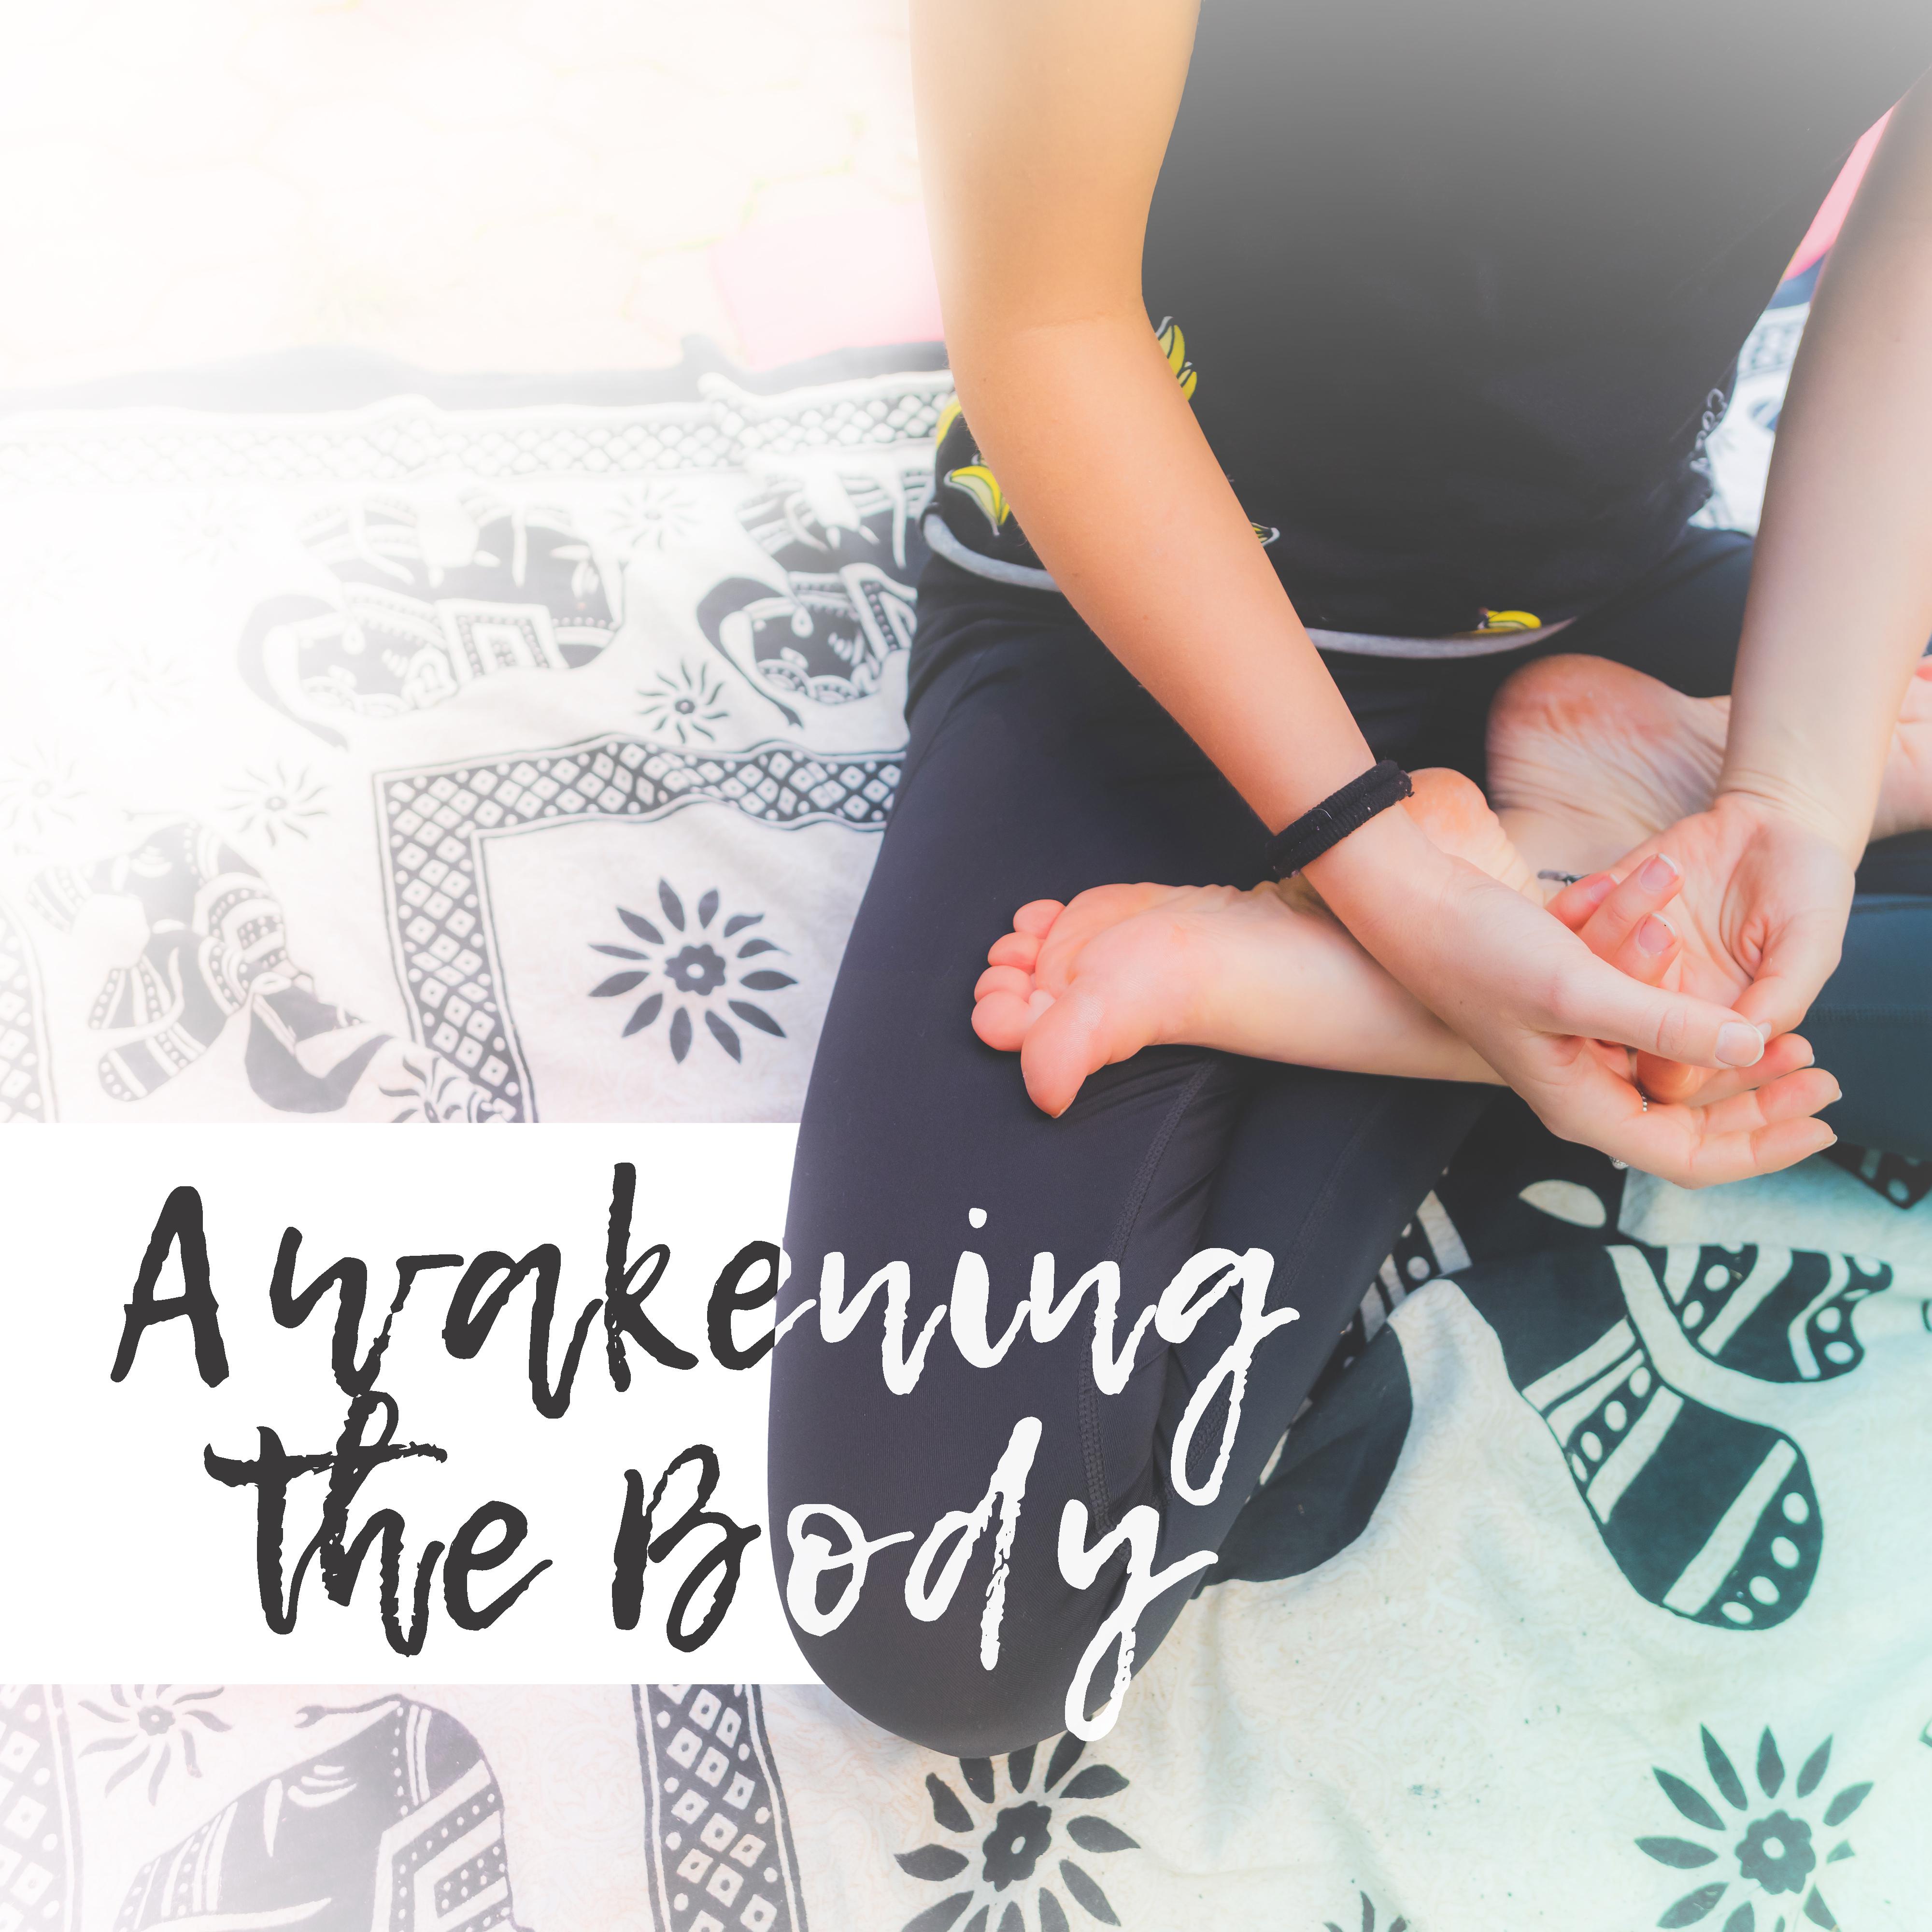 Awakening the Body – Yoga Music, Deep Meditation, Relaxed Body & Mind, New Age 2017 for Yoga